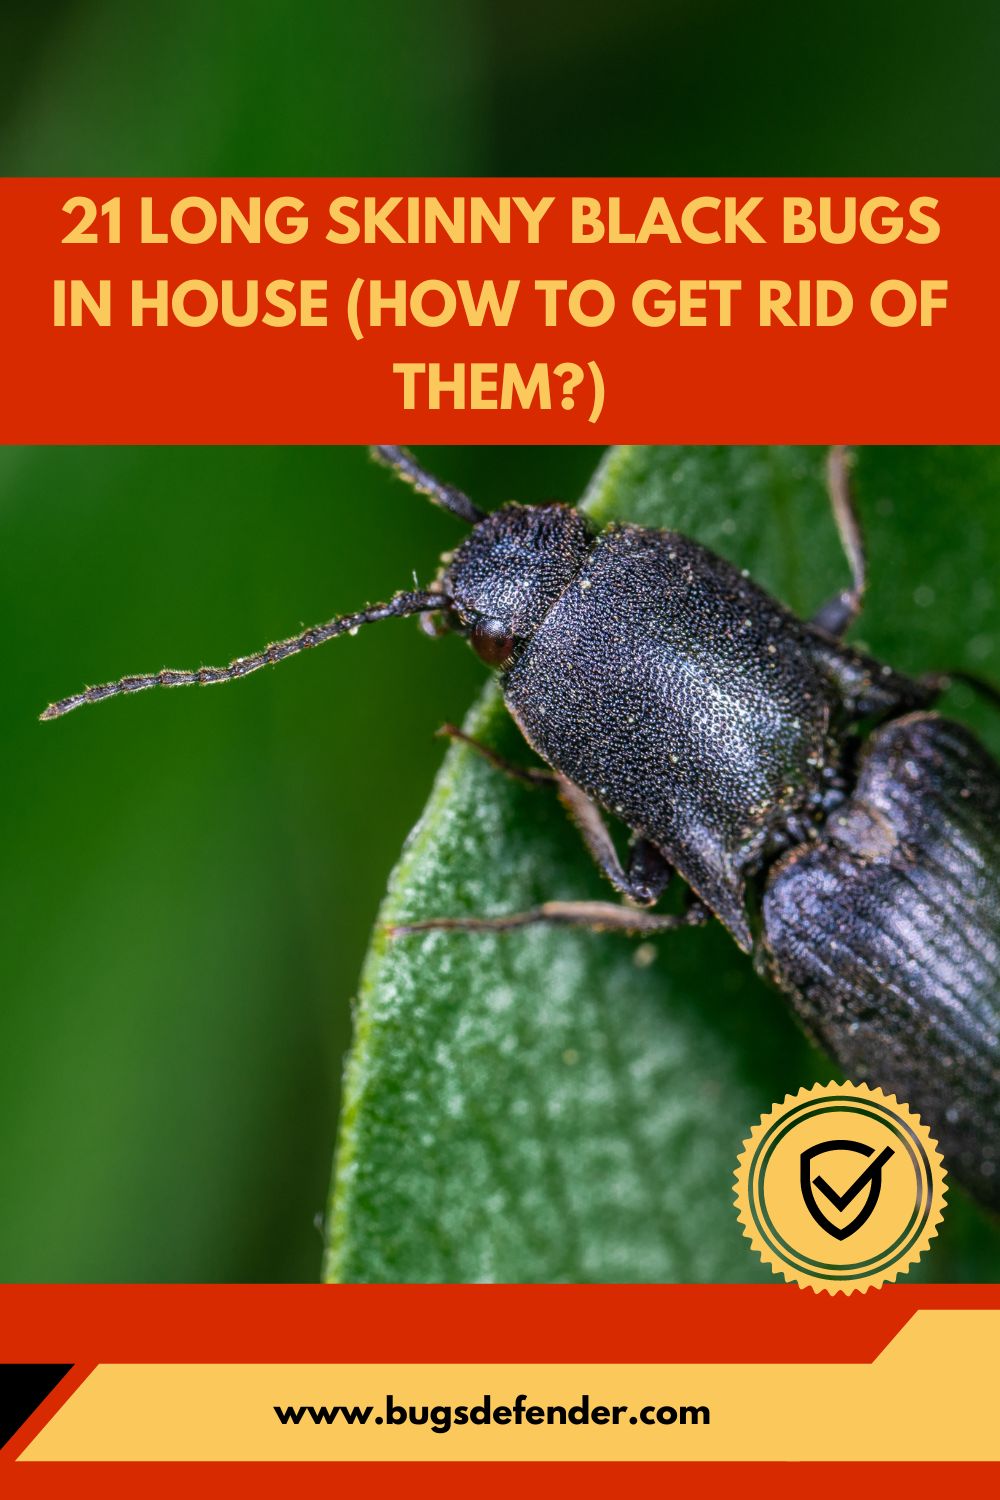 21 Long Skinny Black Bugs in House pin2